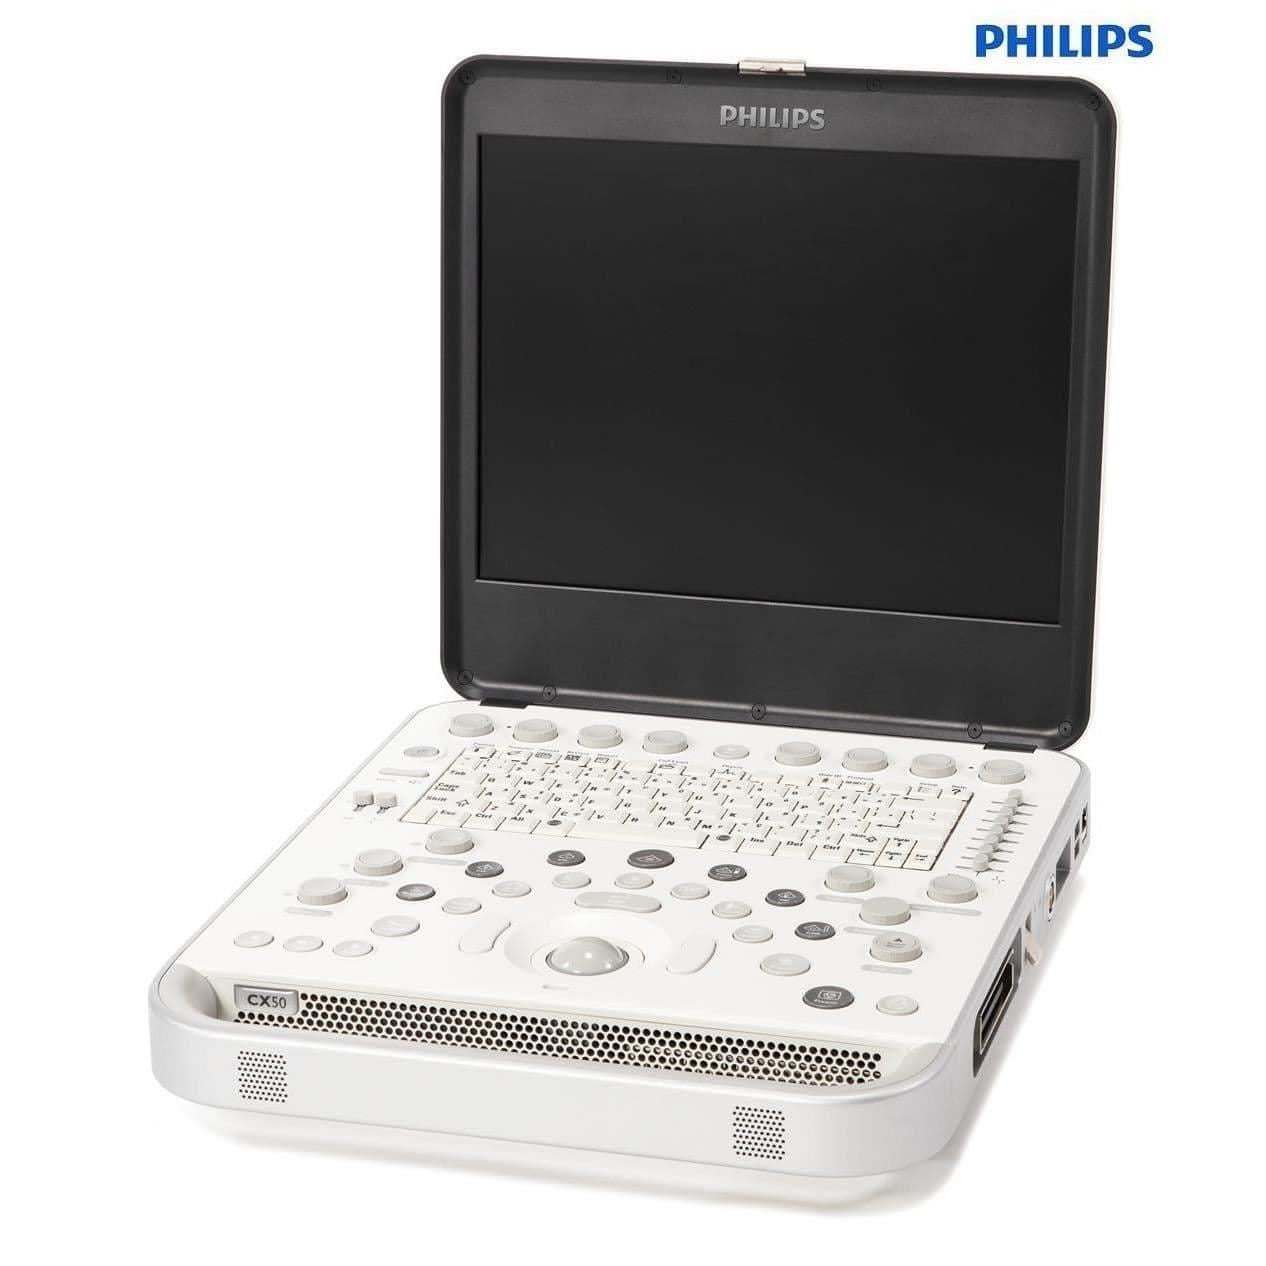 Philips CE CX50